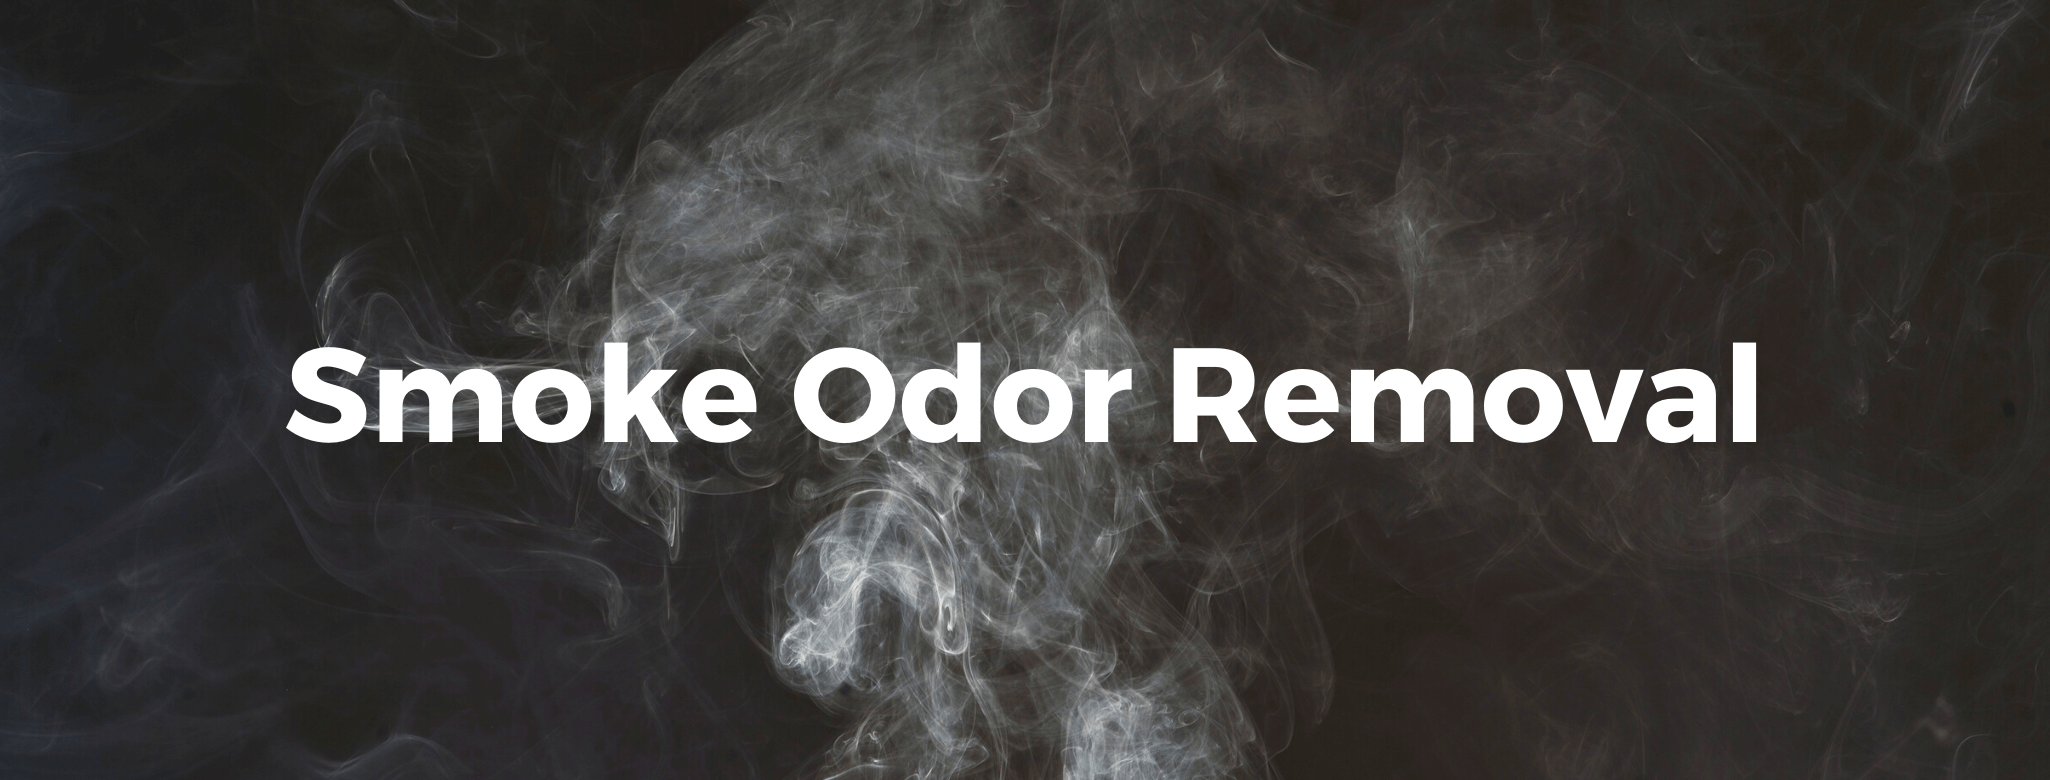 Smoke Odor Removal Service